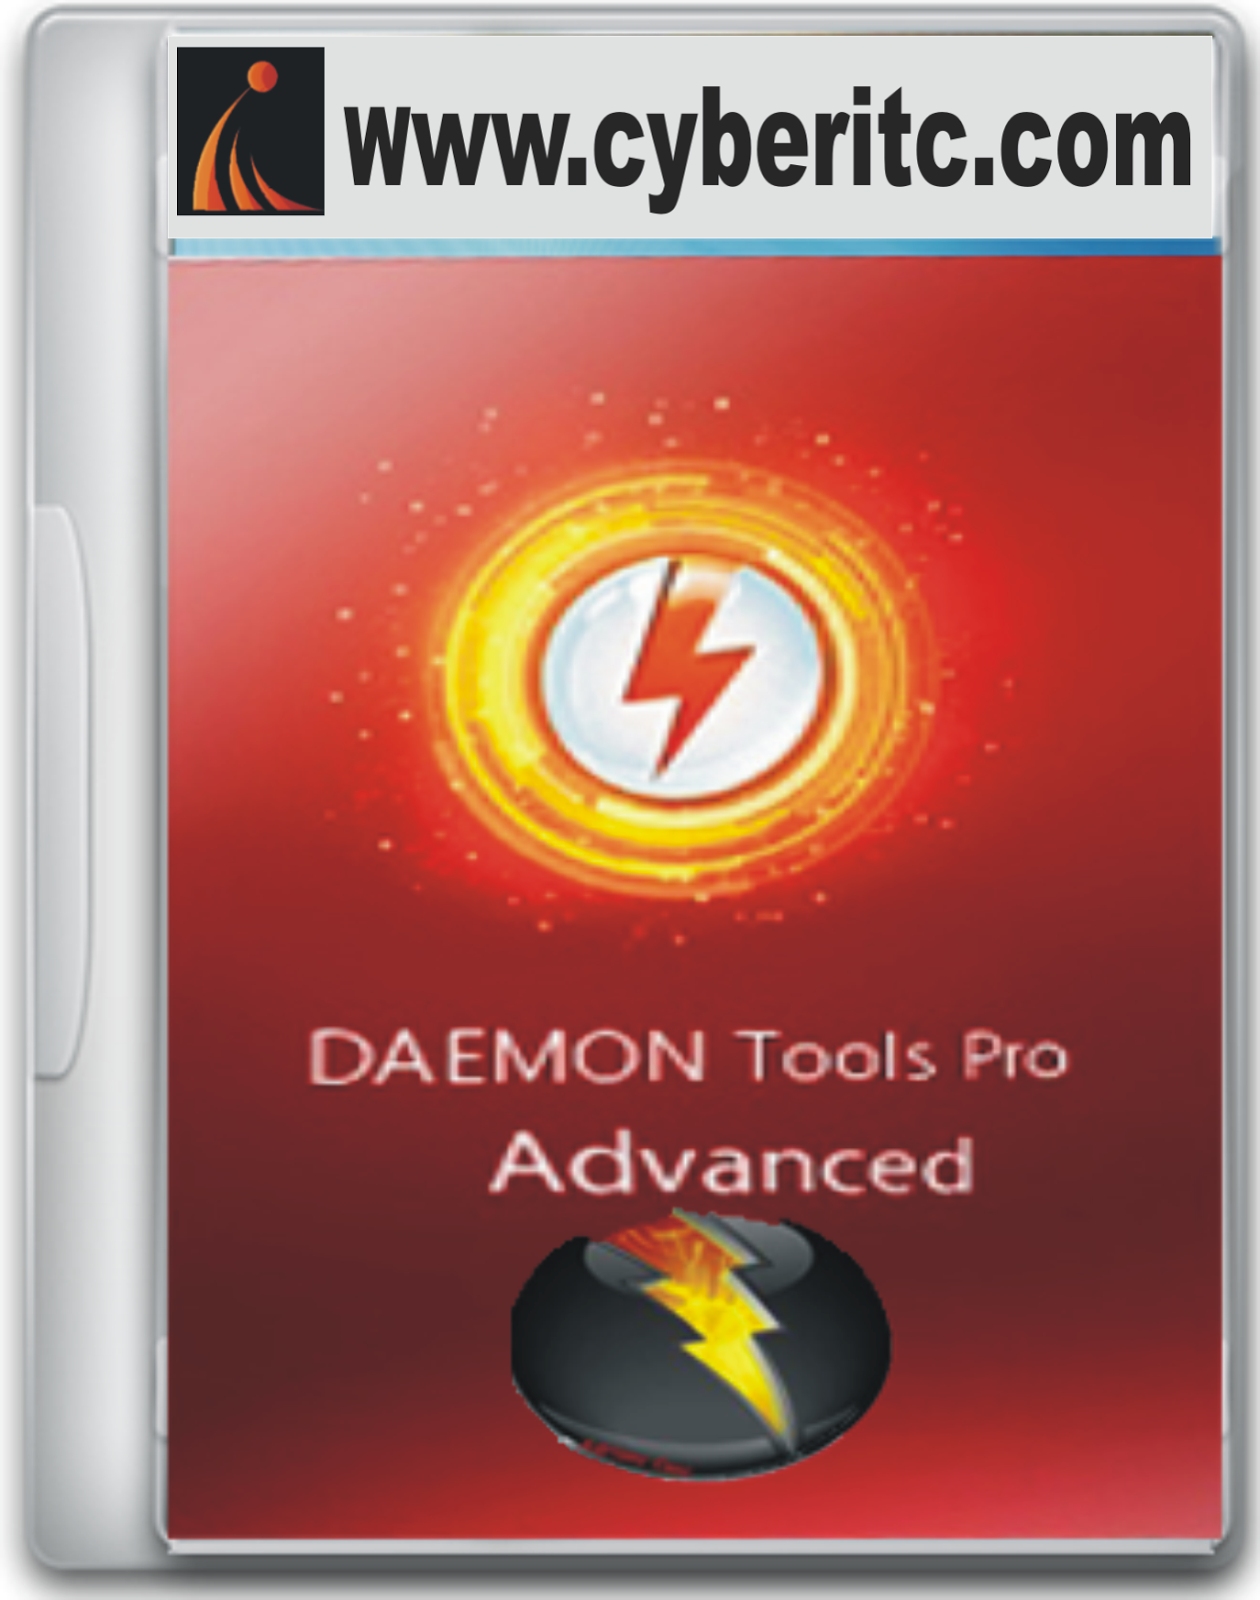 daemon tools full version free download for windows xp